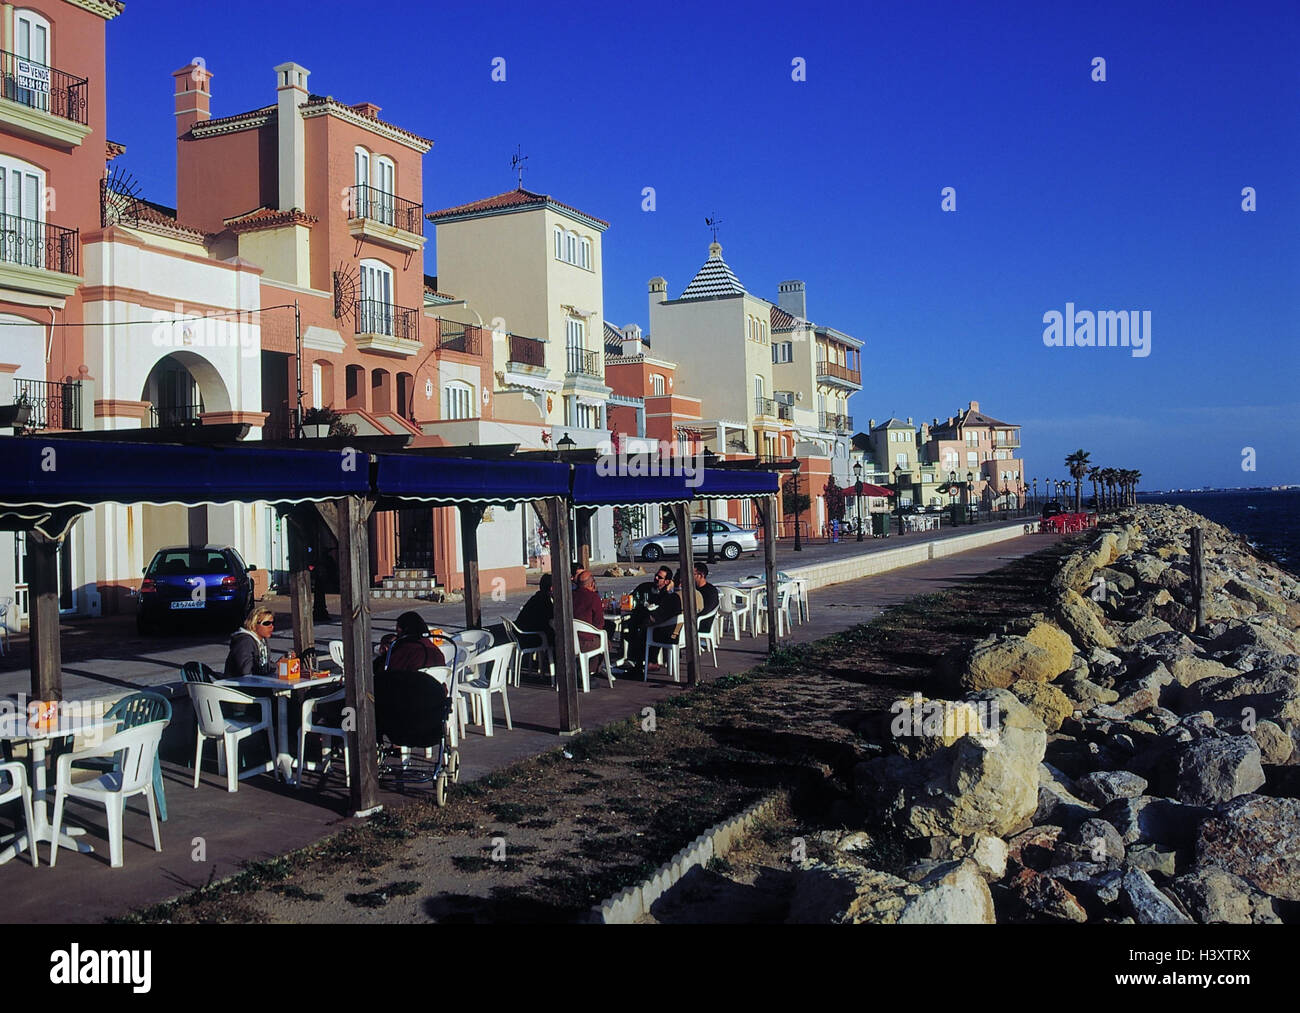 Puerto sherry fotografías e imágenes de alta resolución - Alamy